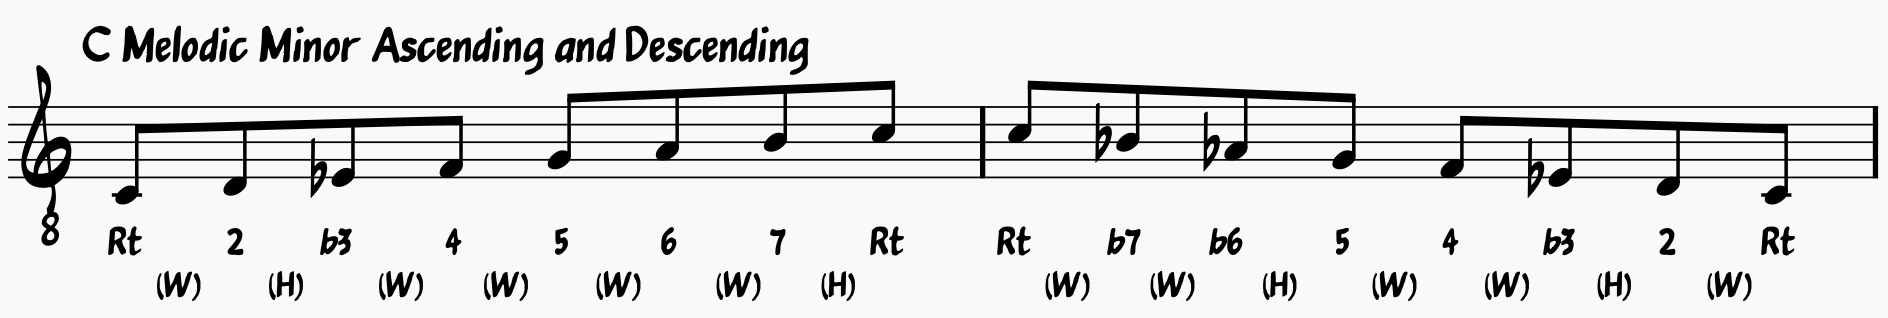 C Melodic Minor Ascending and Descending